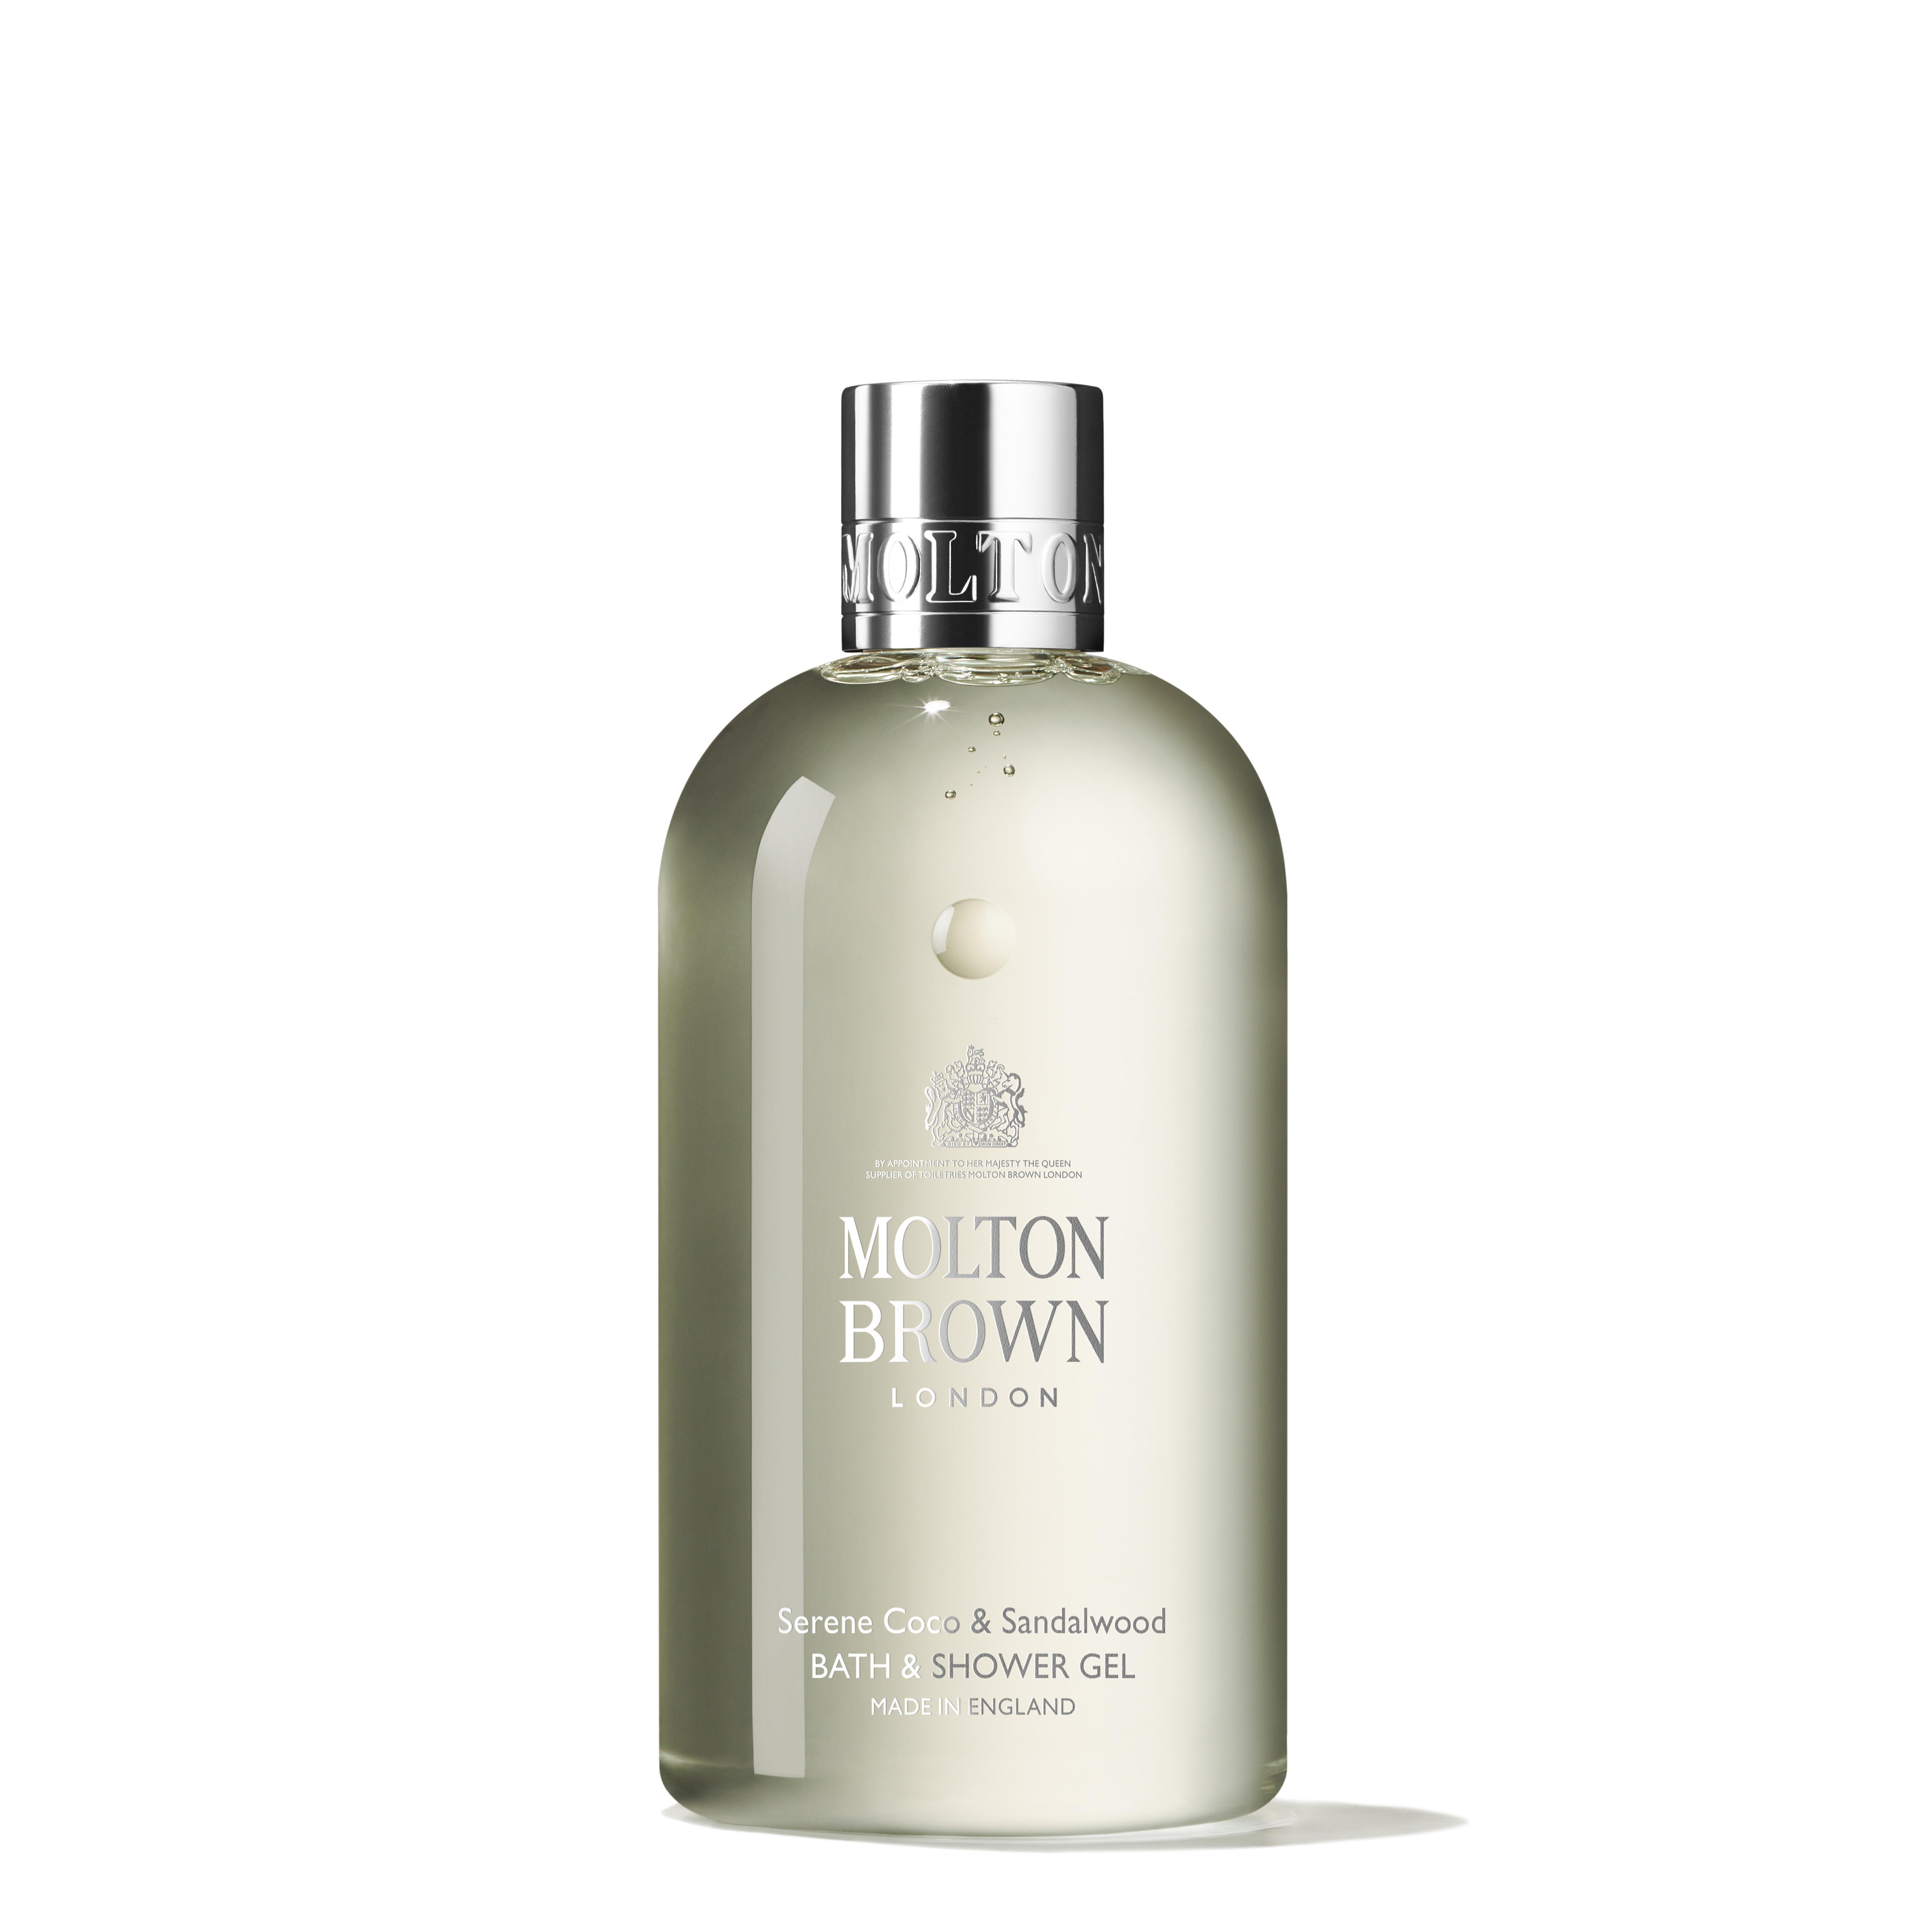 Molton Brown OUTLET Serene Coco & Sandalwood Bath & Shower Gel 300ml